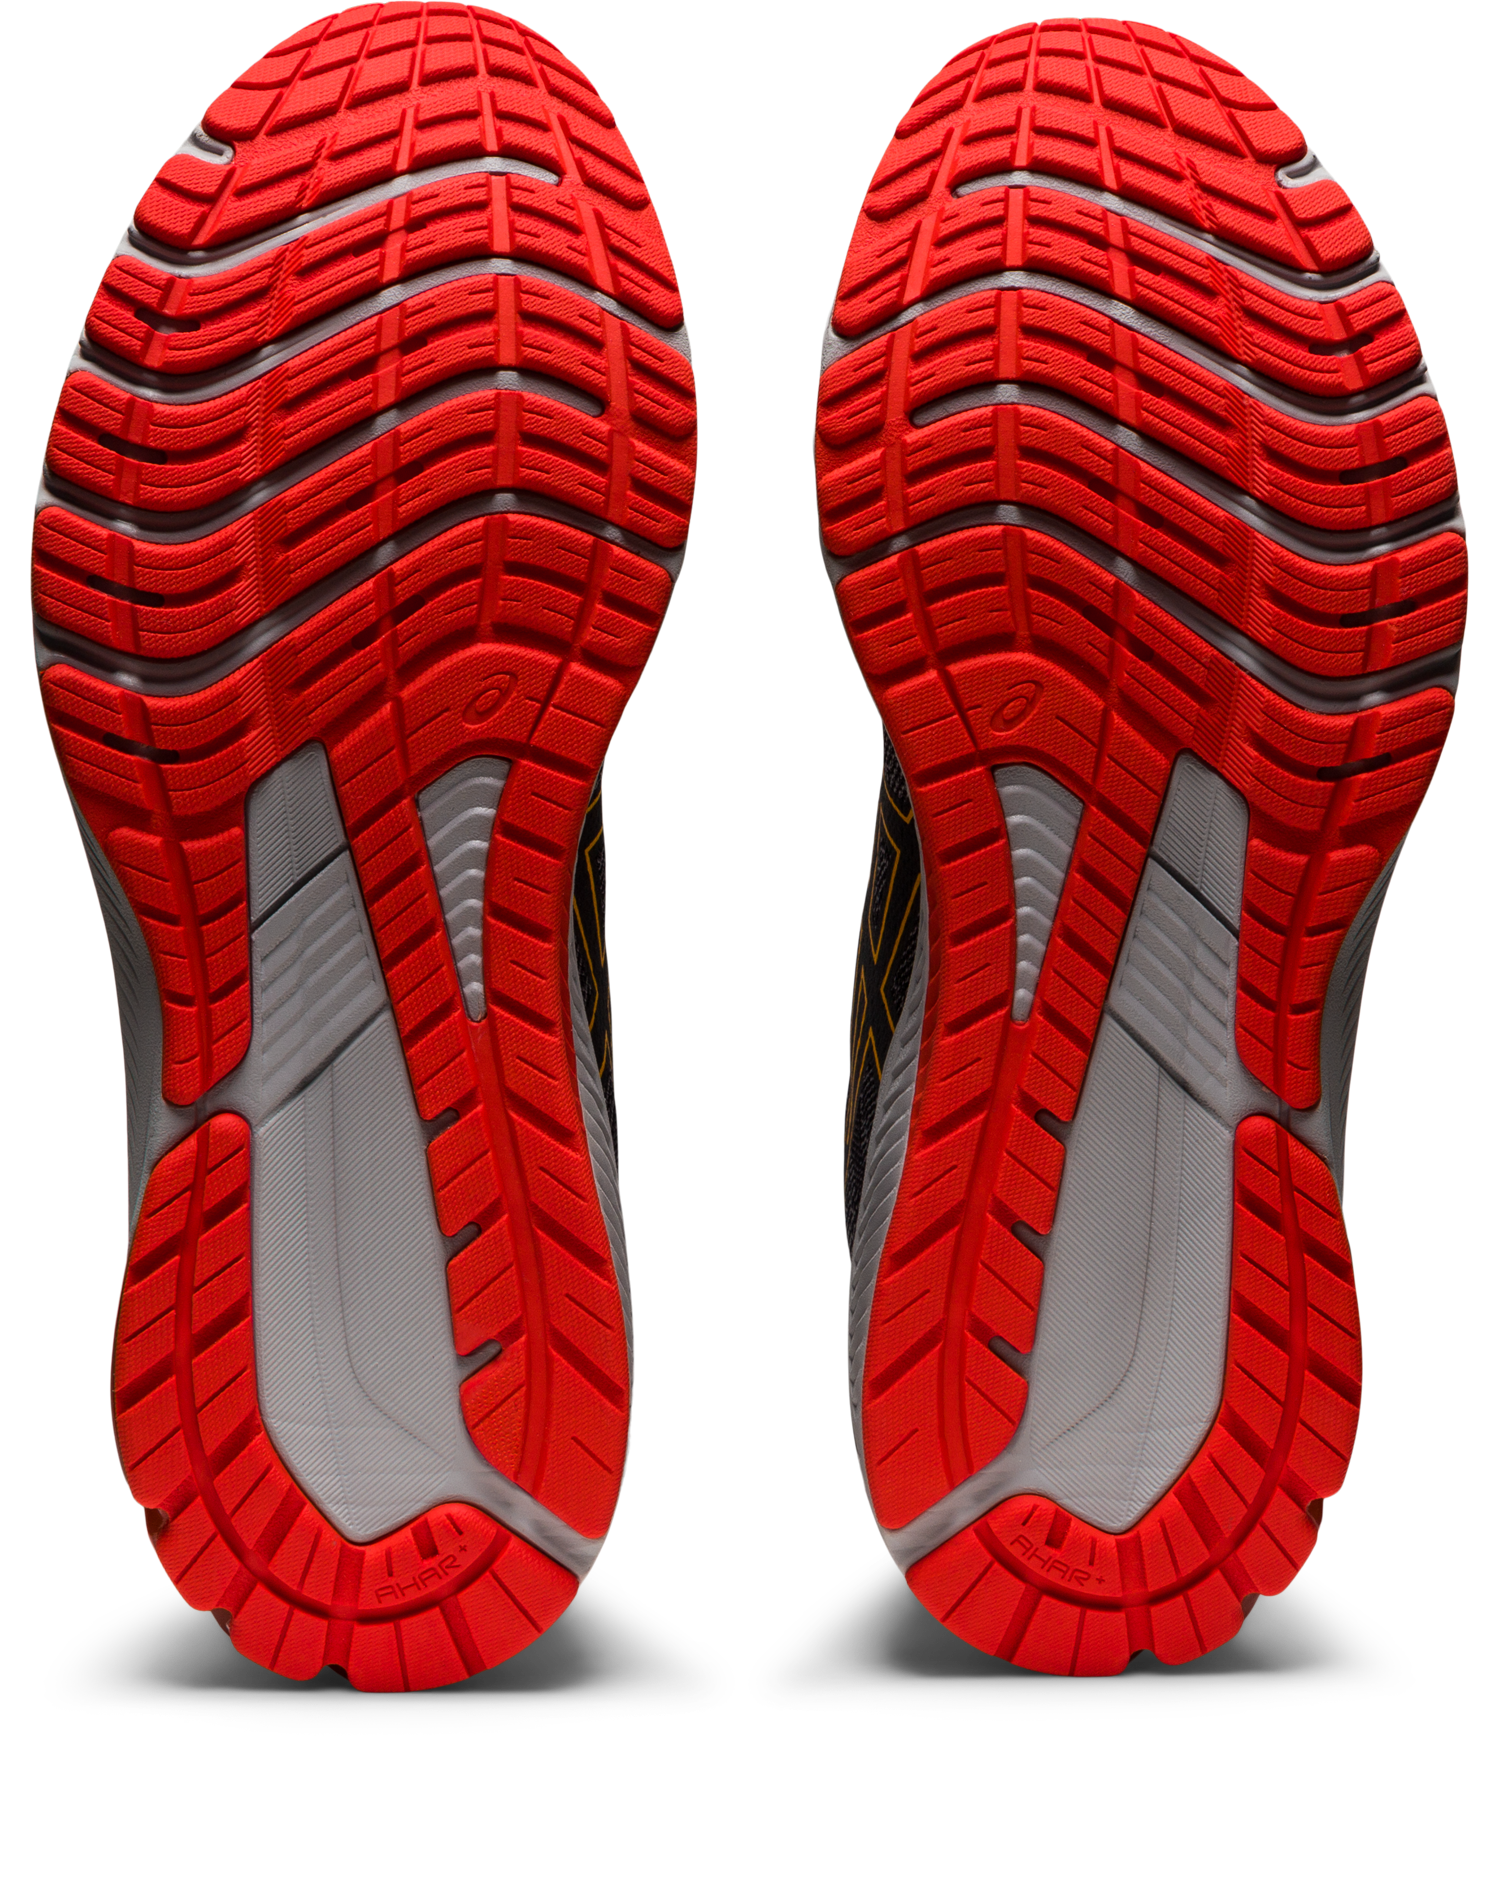 Asics Men's GT-1000 11 (2E) Wide Running Shoes in Sheet Rock/Black